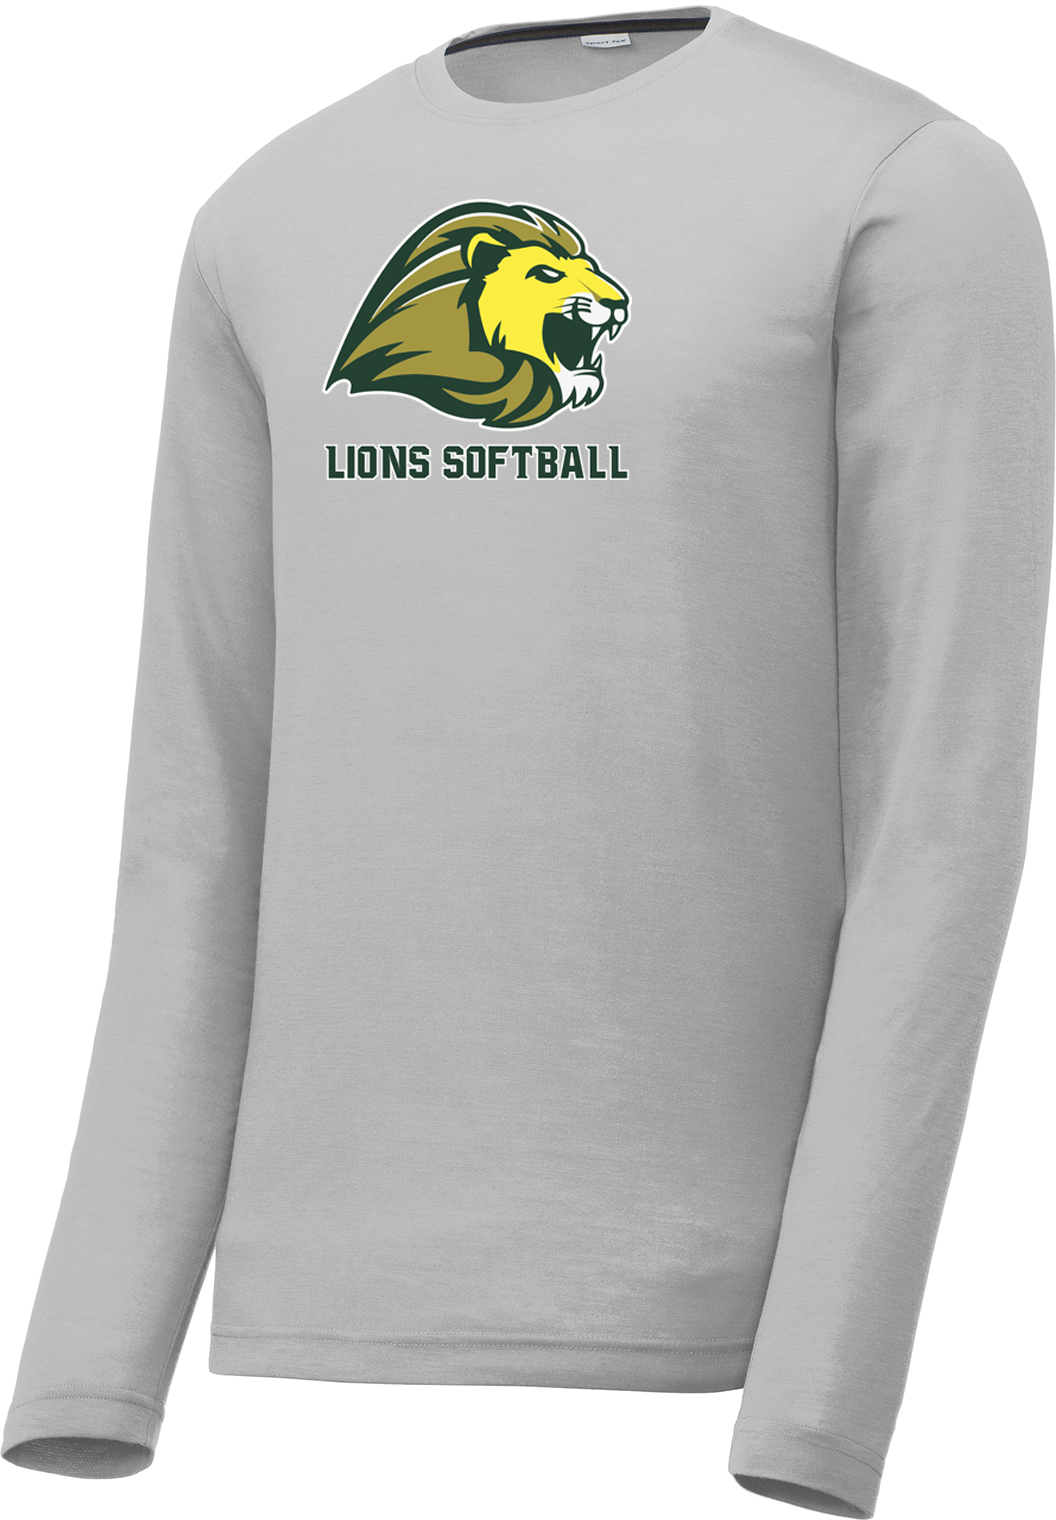 EP Lions Softball Long Sleeve CottonTouch Performance Shirt